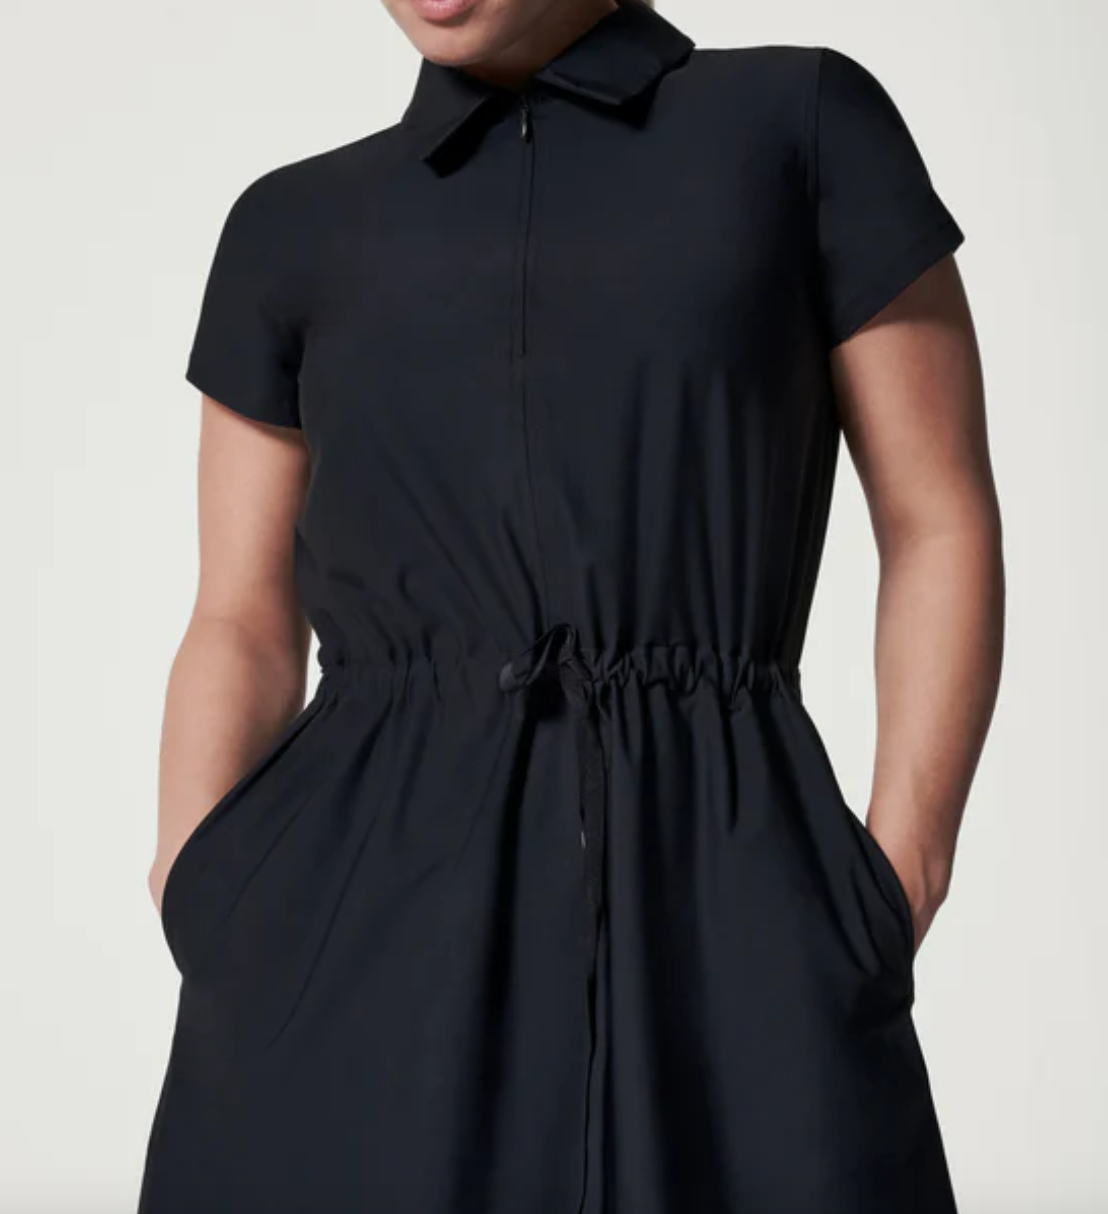 Spanx Sunshine Dress Black UPF 50+ Drawstring Waist and Pockets